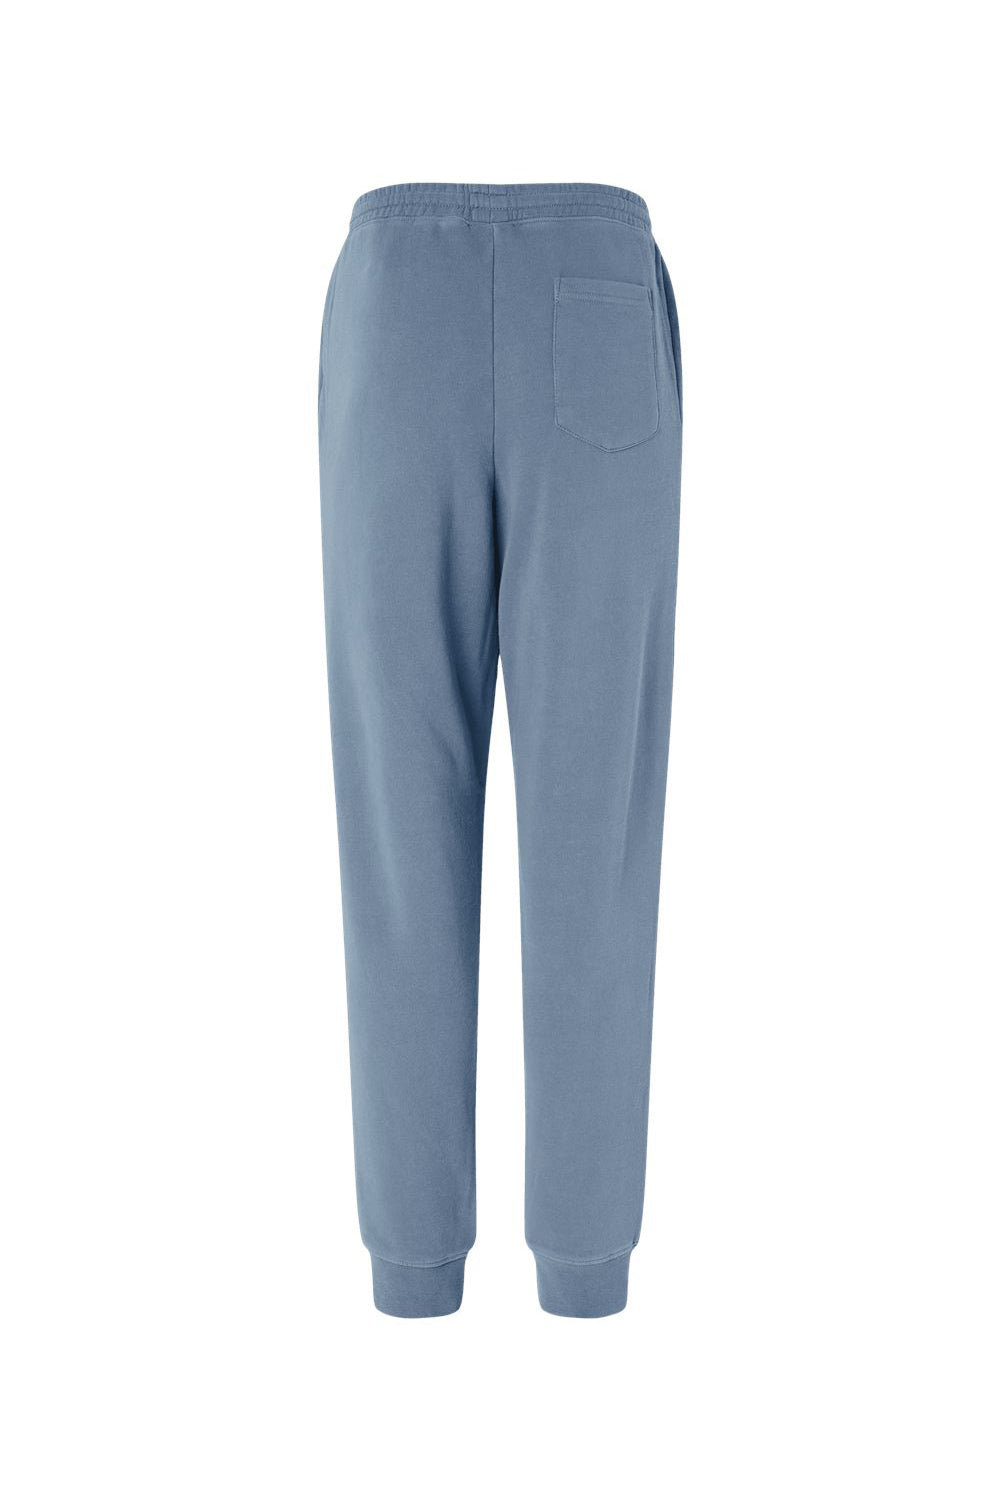 Independent Trading Co. PRM50PTPD Mens Pigment Dyed Fleece Sweatpants w/ Pockets Slate Blue Flat Back